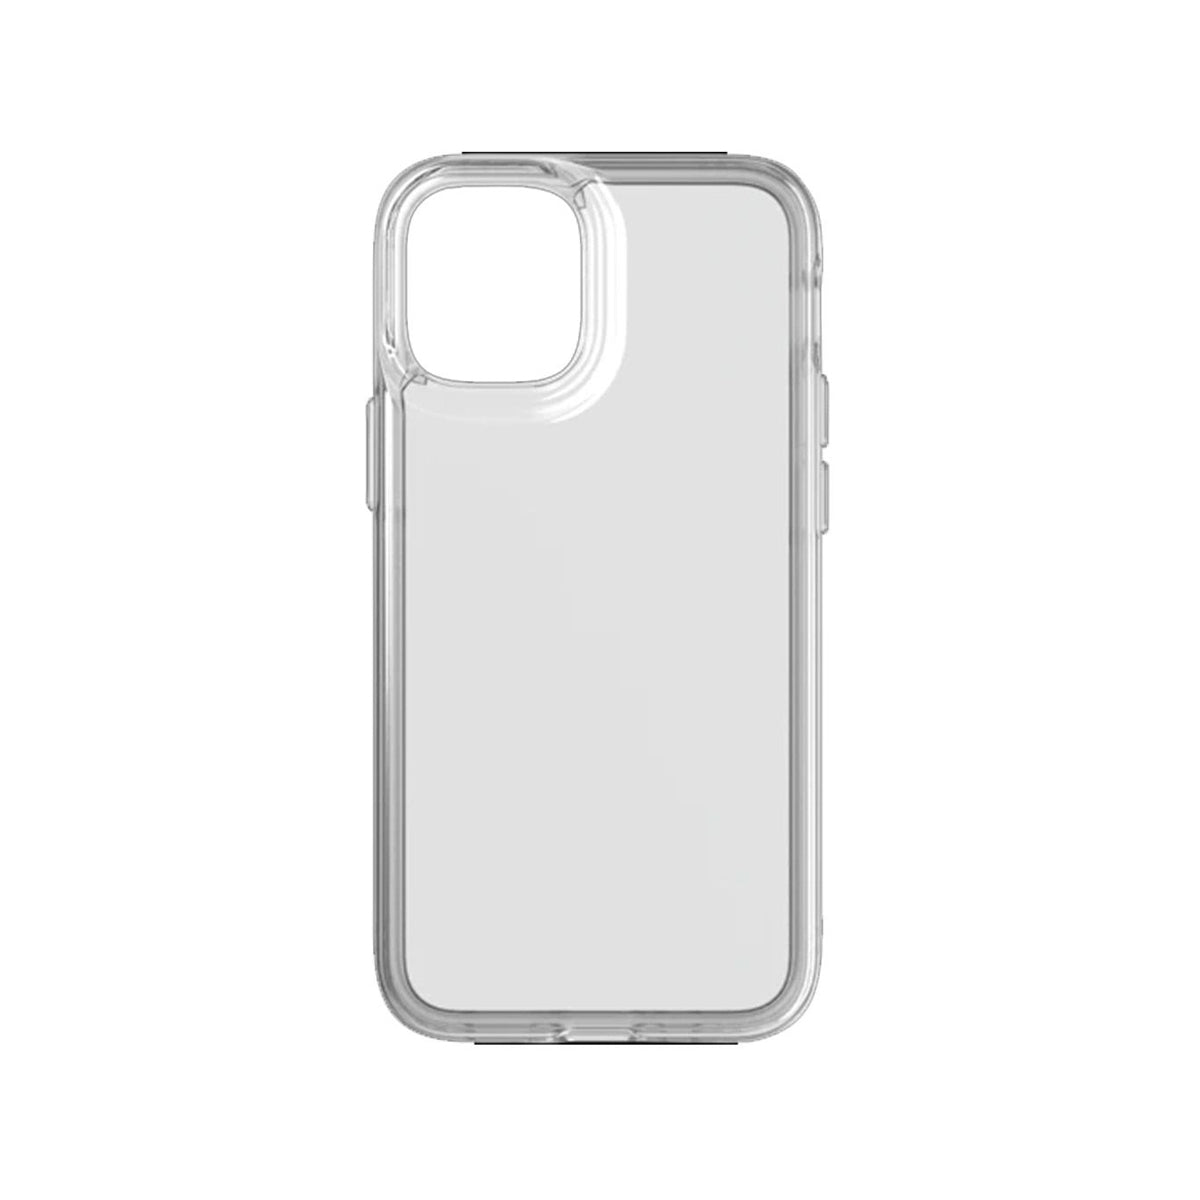 Tech21 Evo Clear Case for iPhone 12 mini T21-8357 - Clear.